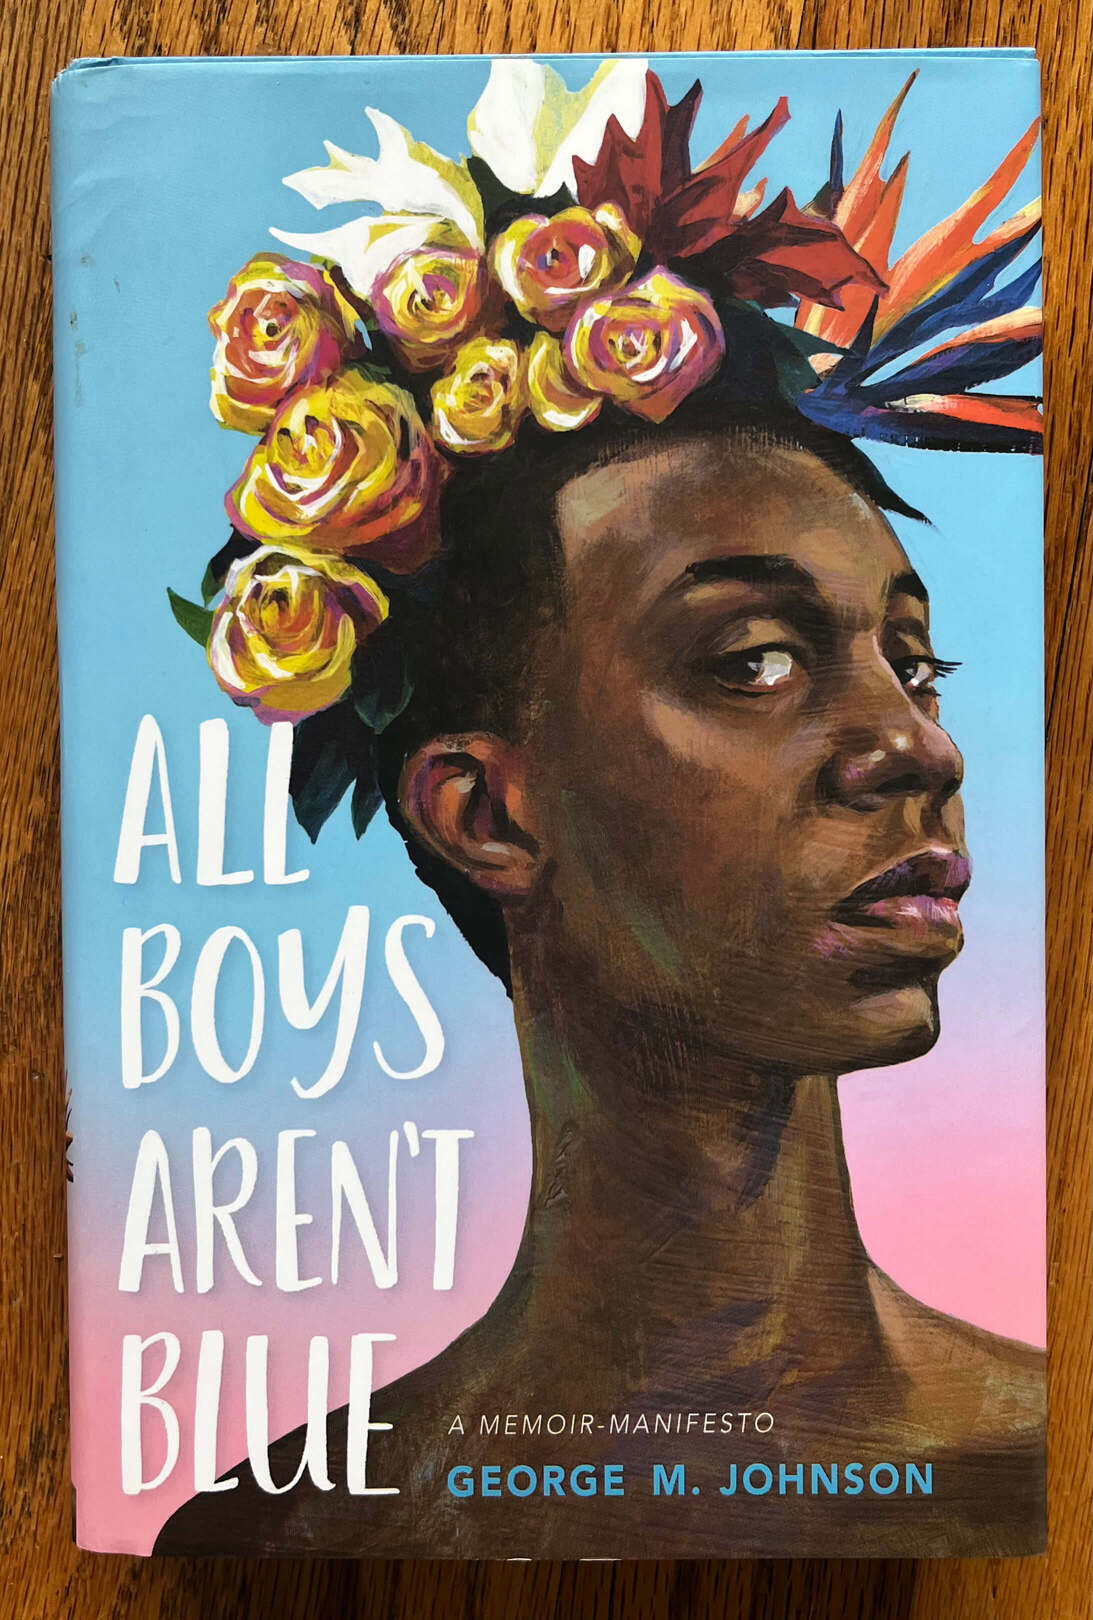 “All Boys Aren’t Blue: A Memoir-Manifesto” by George M. Johnson.